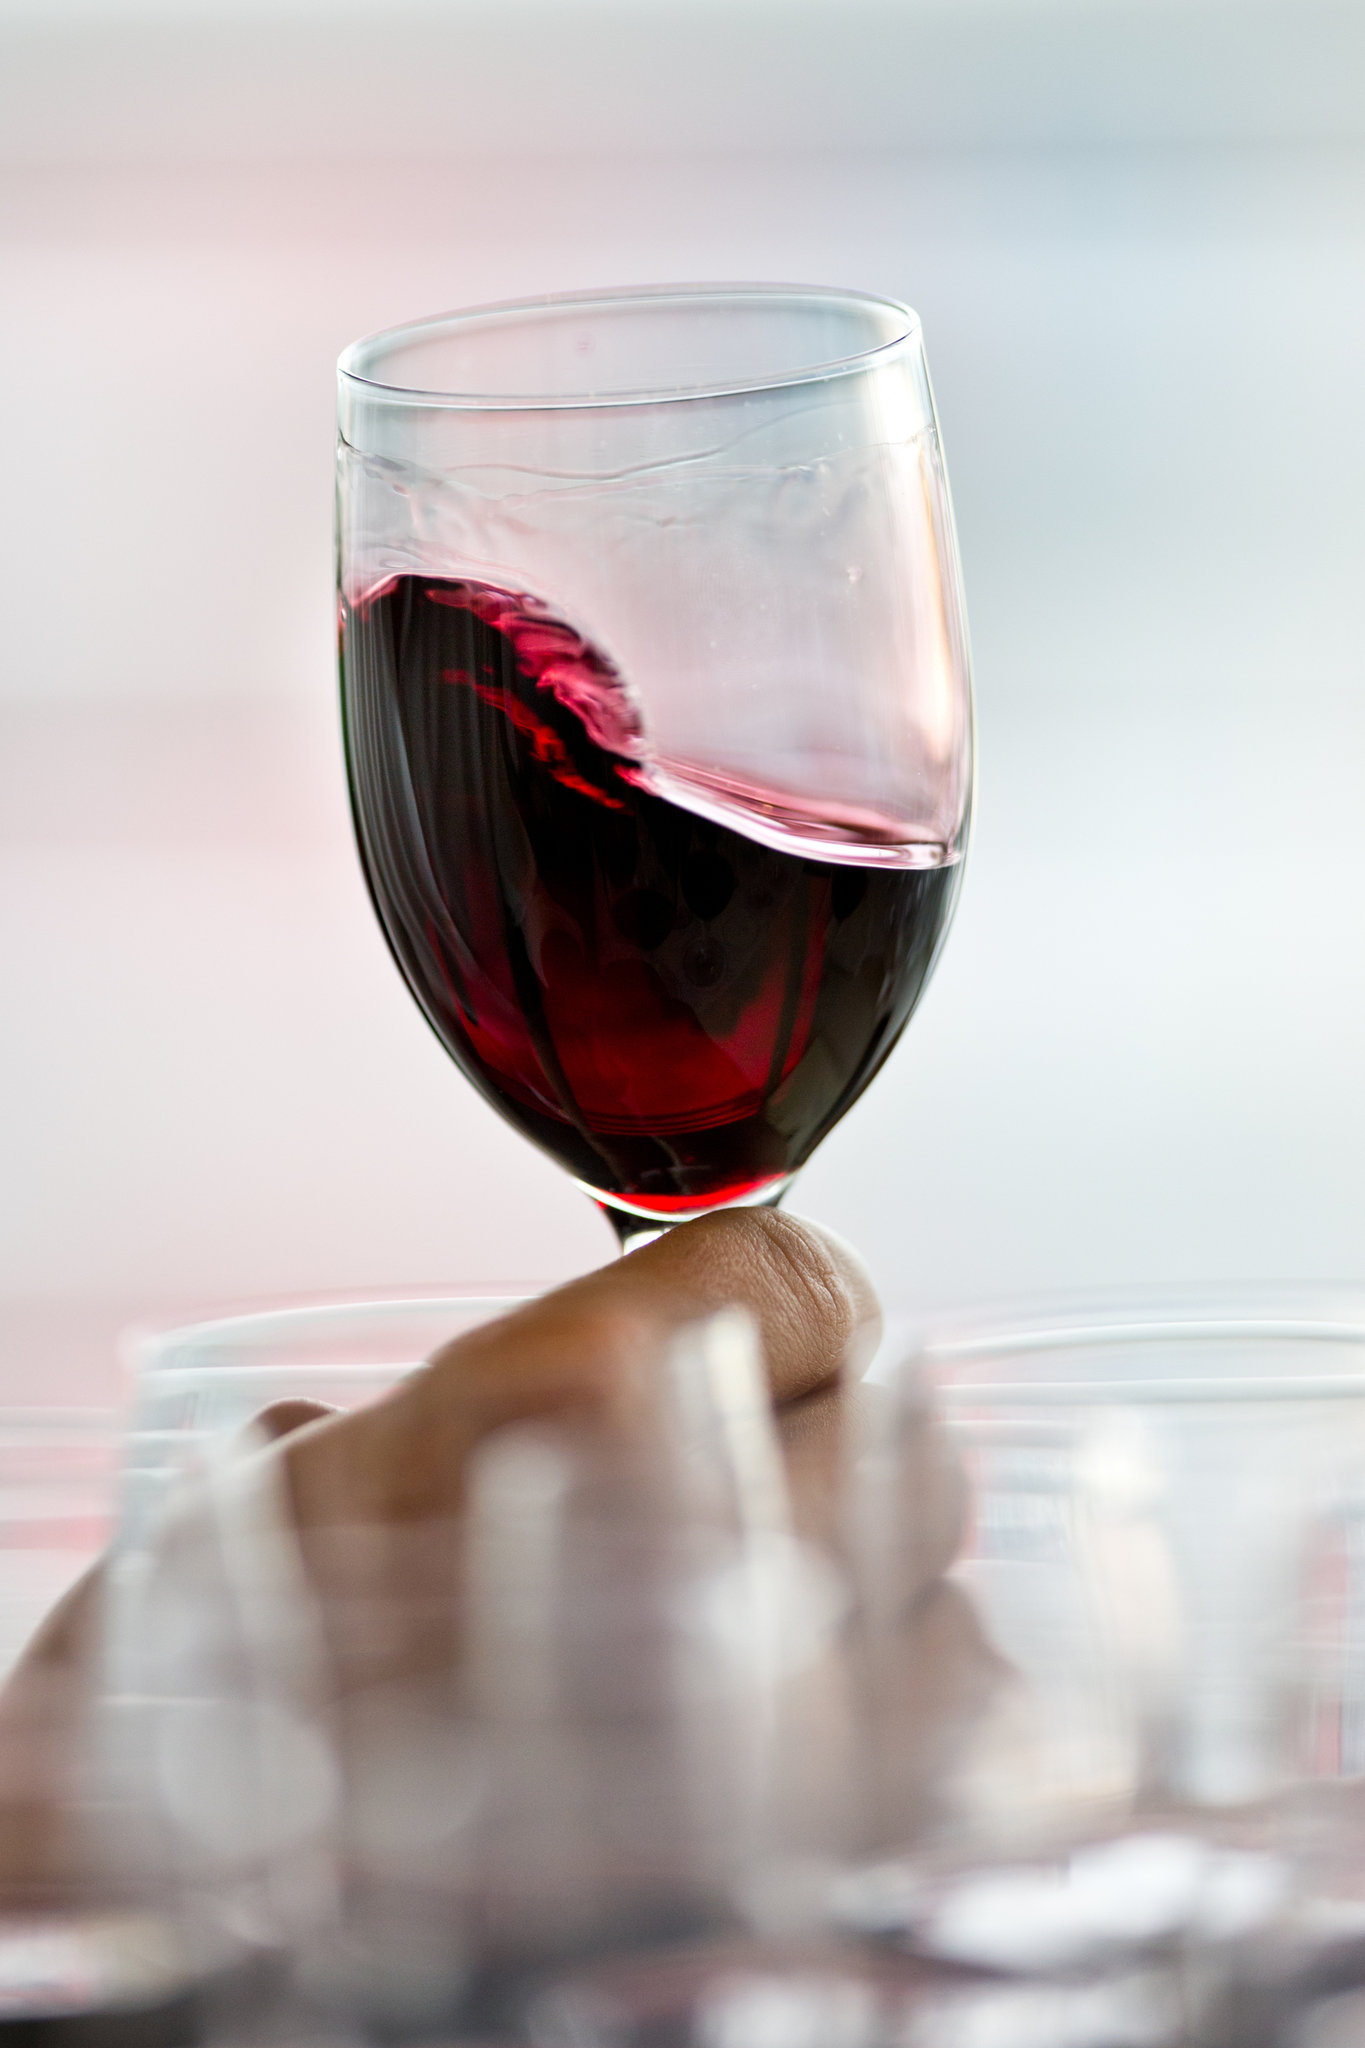 Contenido: Calorías en el vino tinto